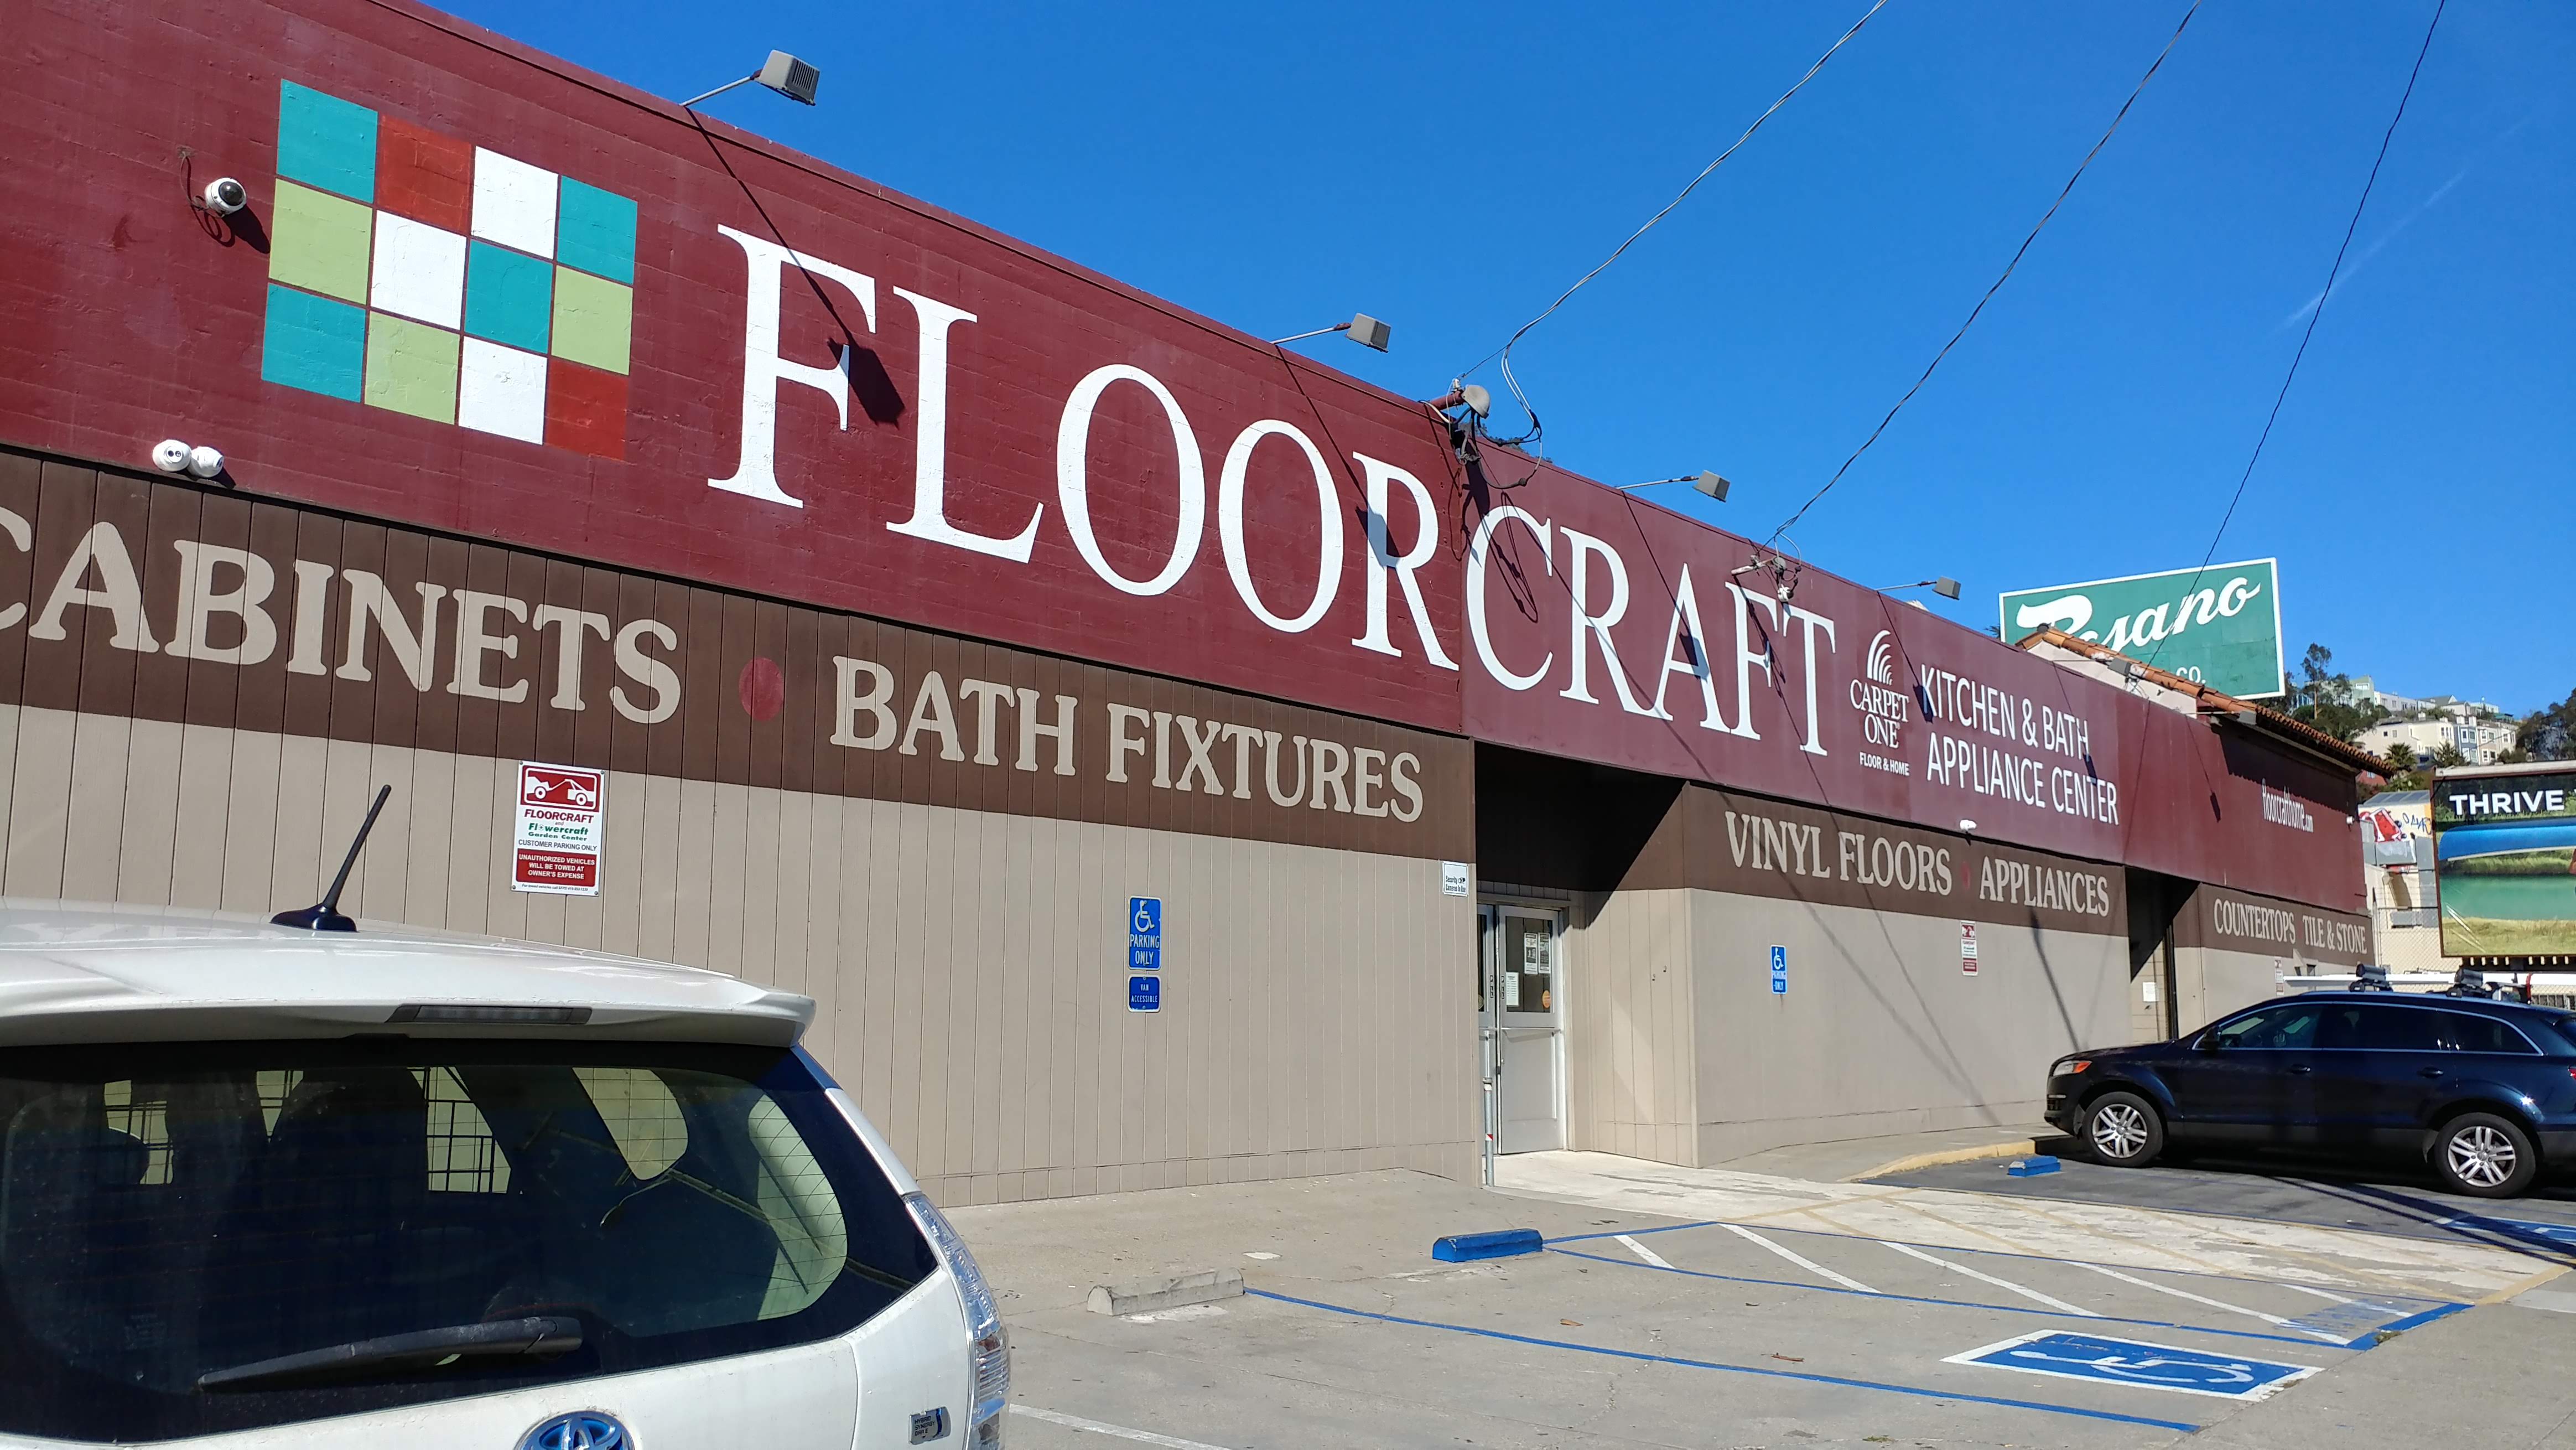 Floorcraft - Home Improvement Store Photo